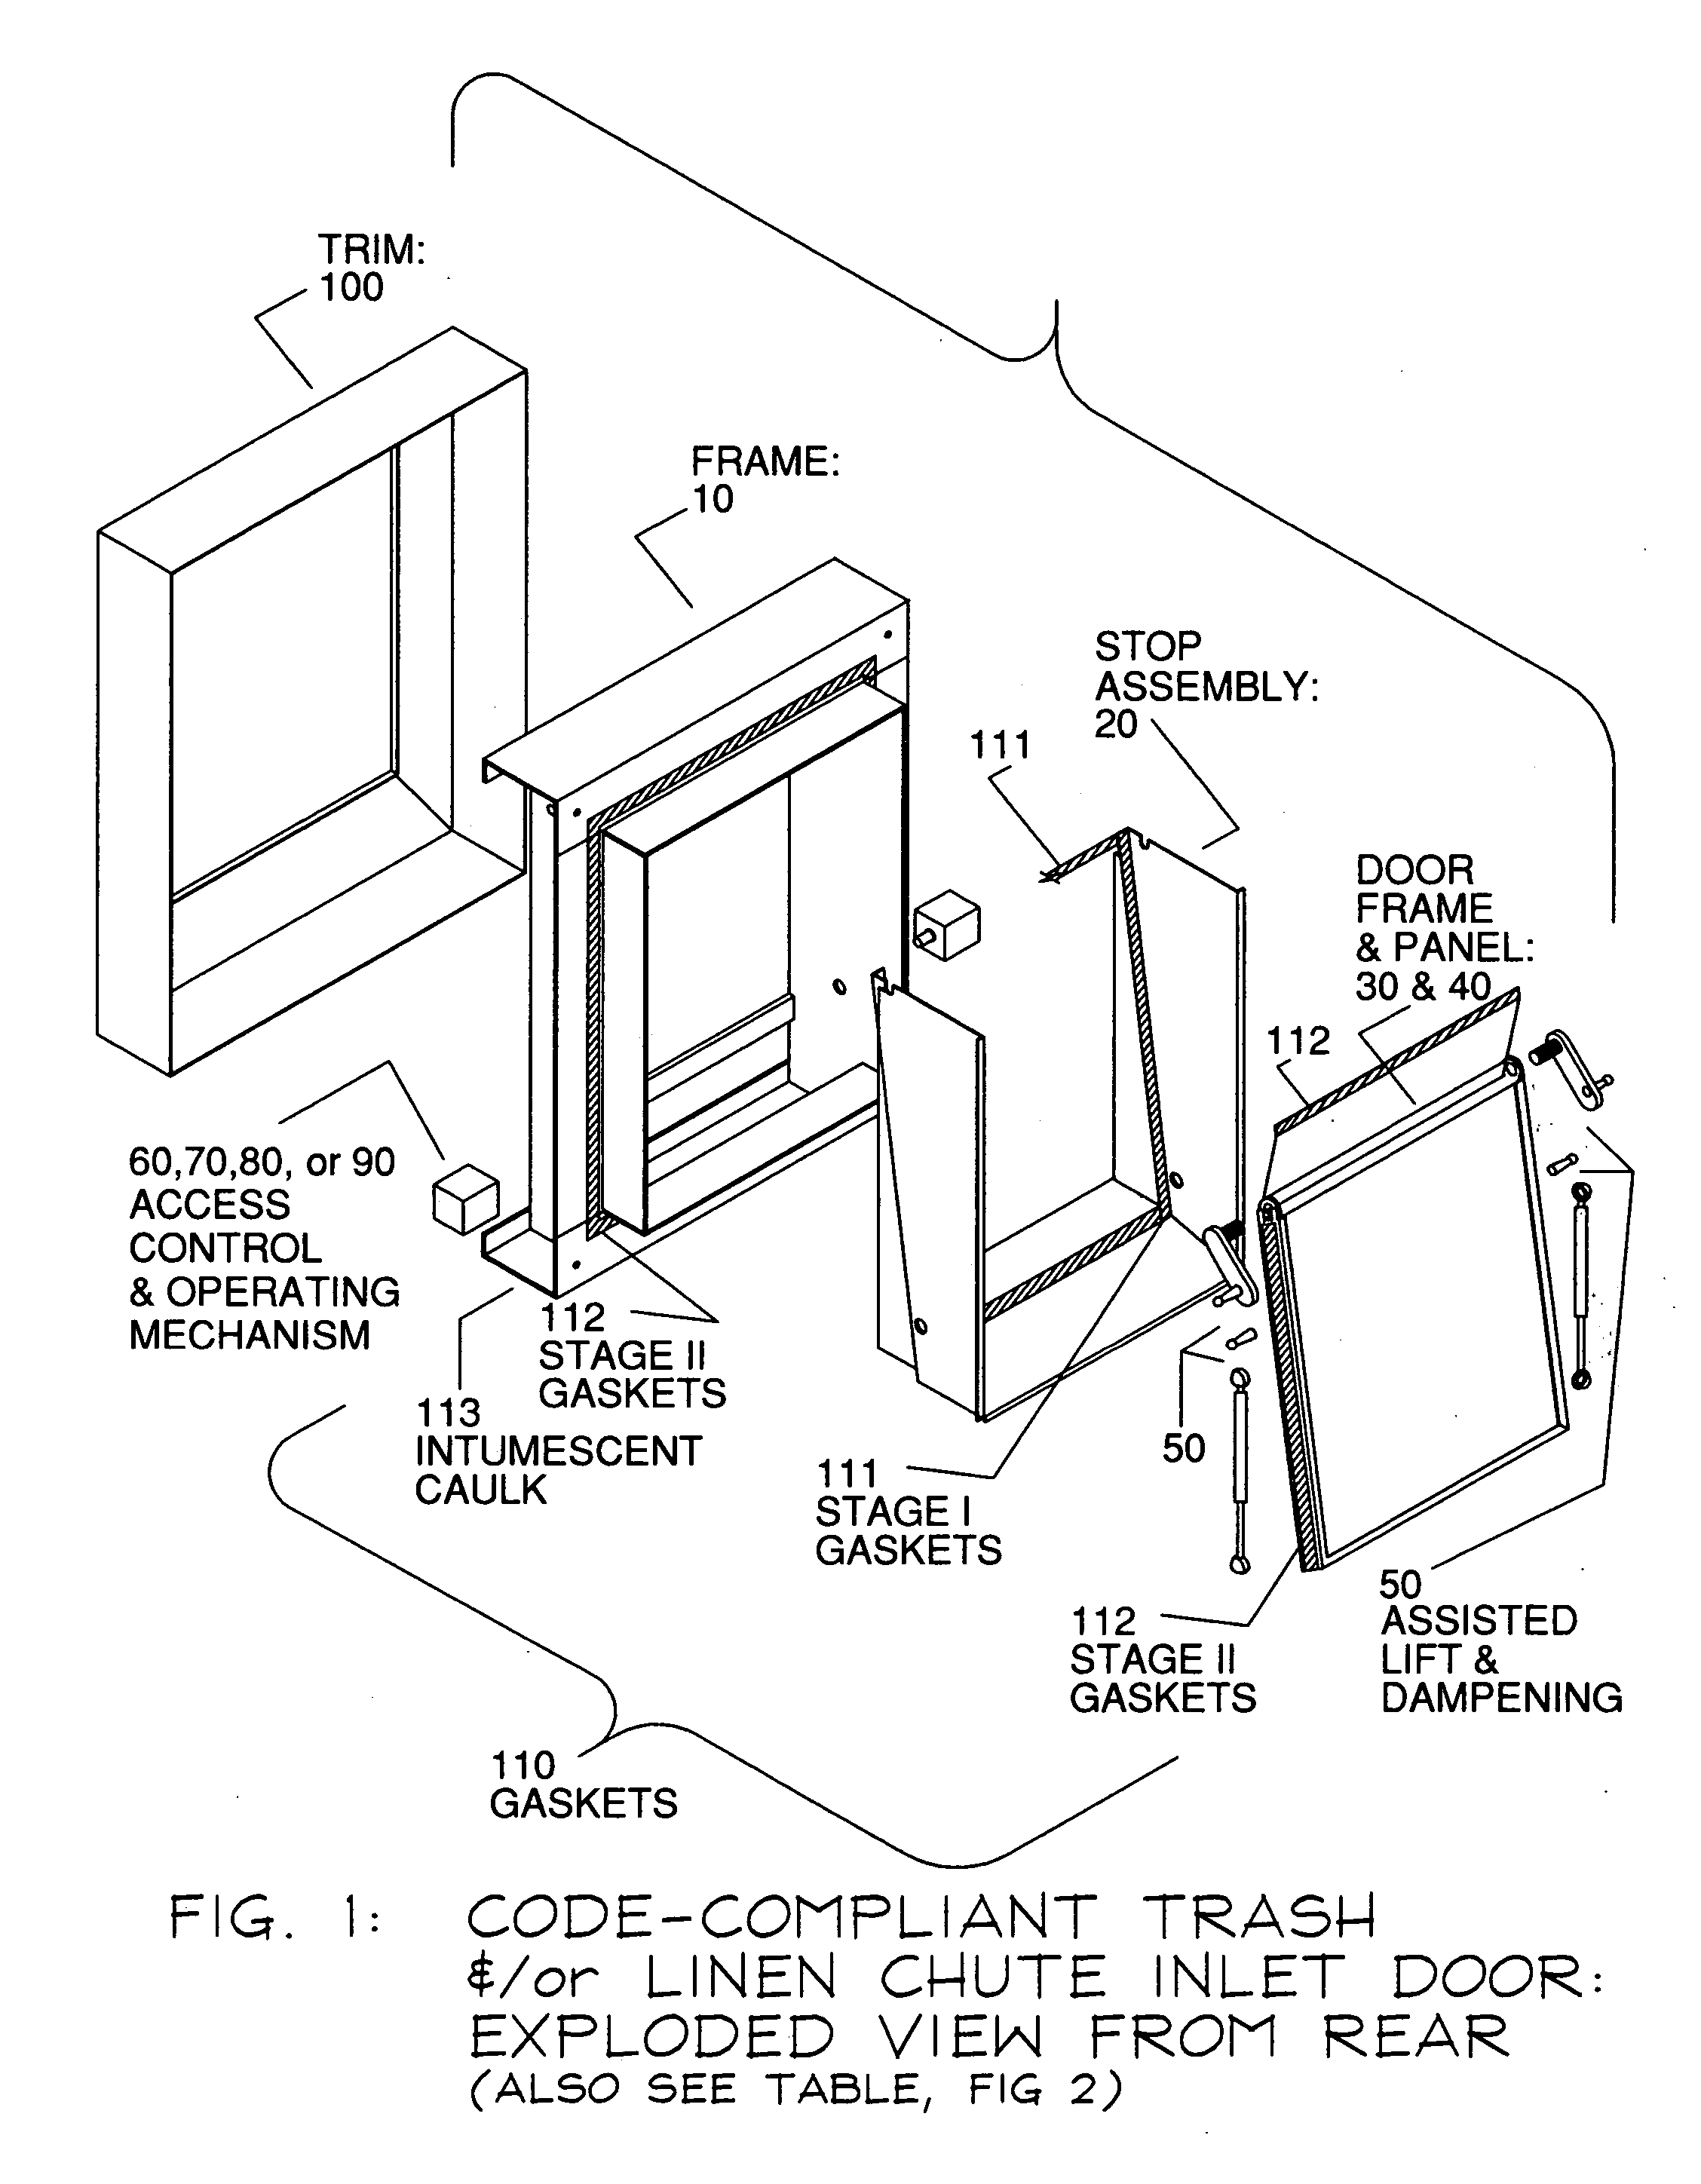 Code compliant, trash and/or linen chute inlet door